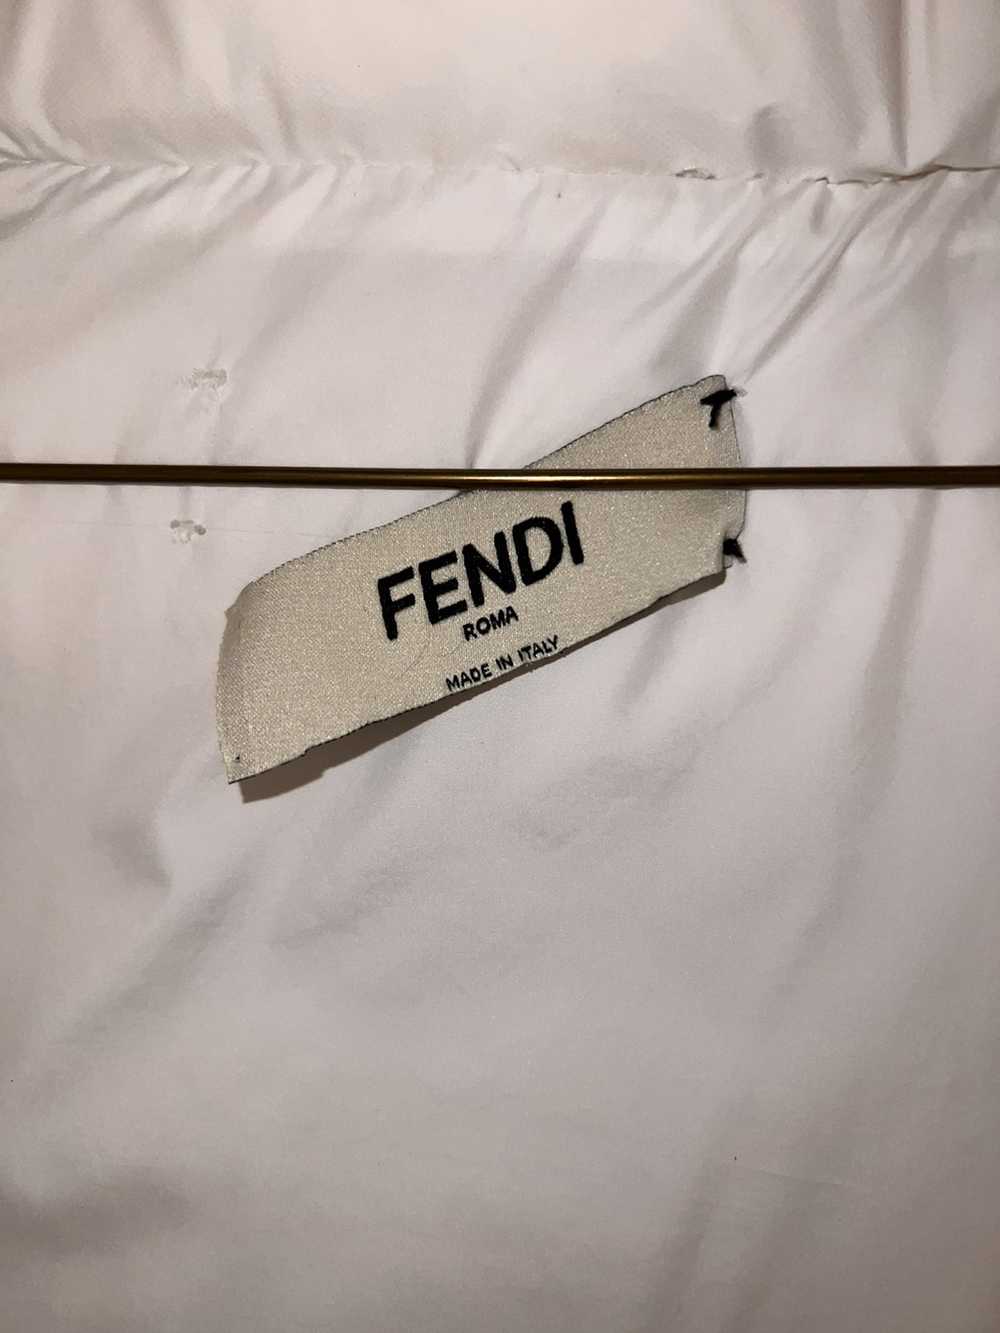 Fendi Fendi Roma Piumino Down Jacket - image 4